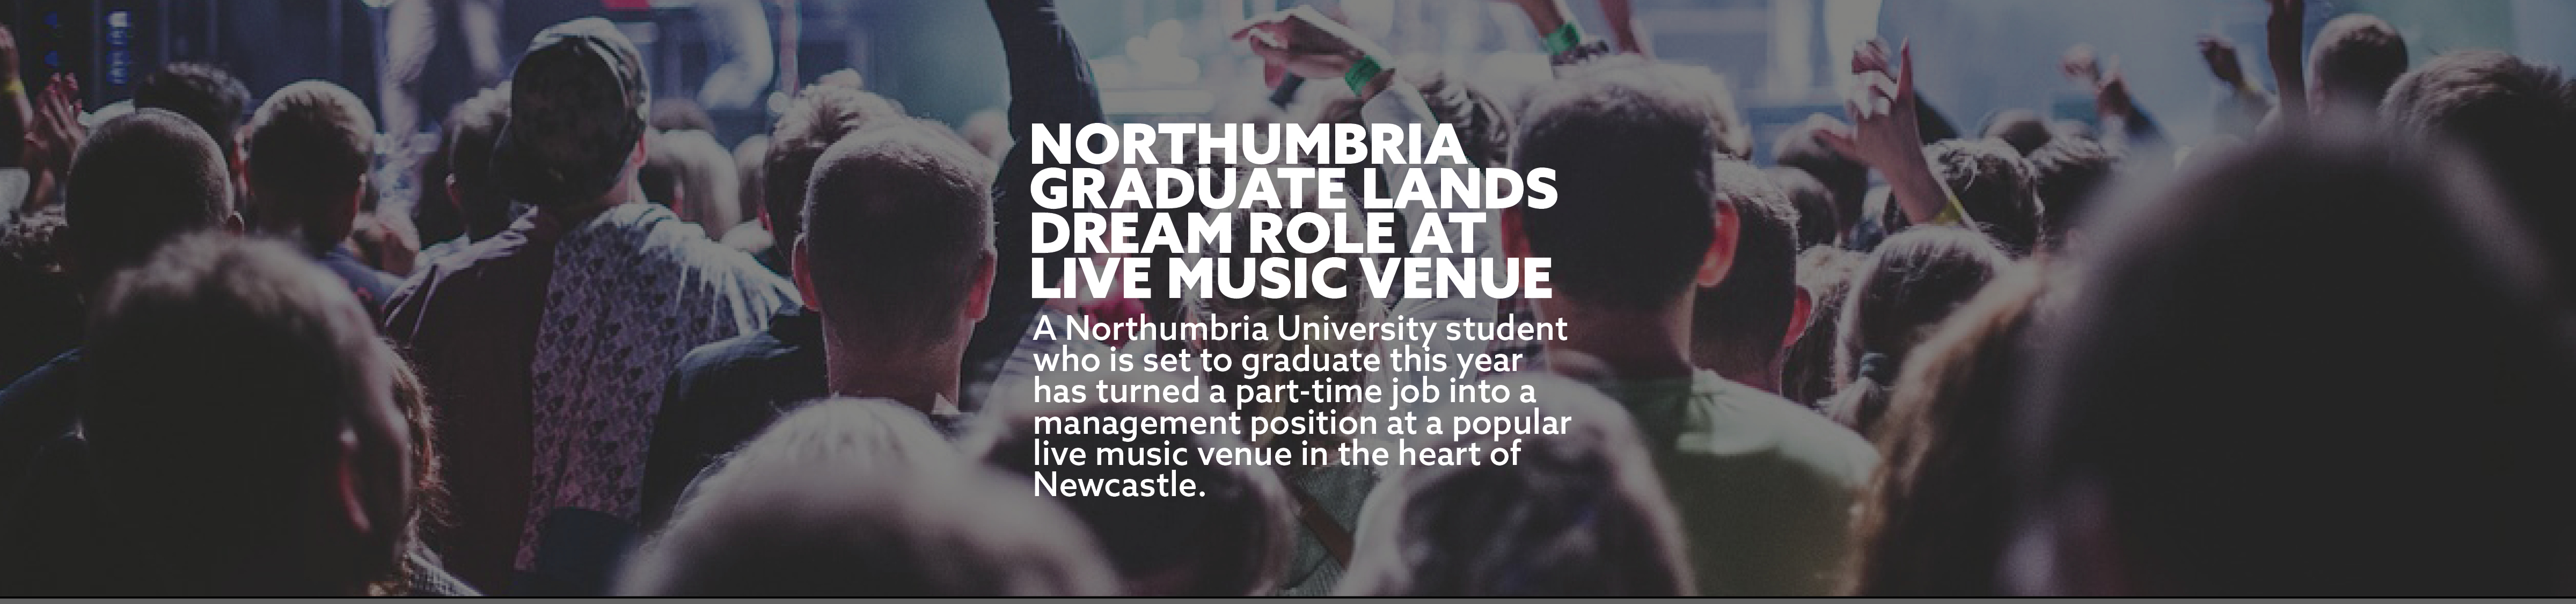 Northumbria Graduate lands dream role at live music venue